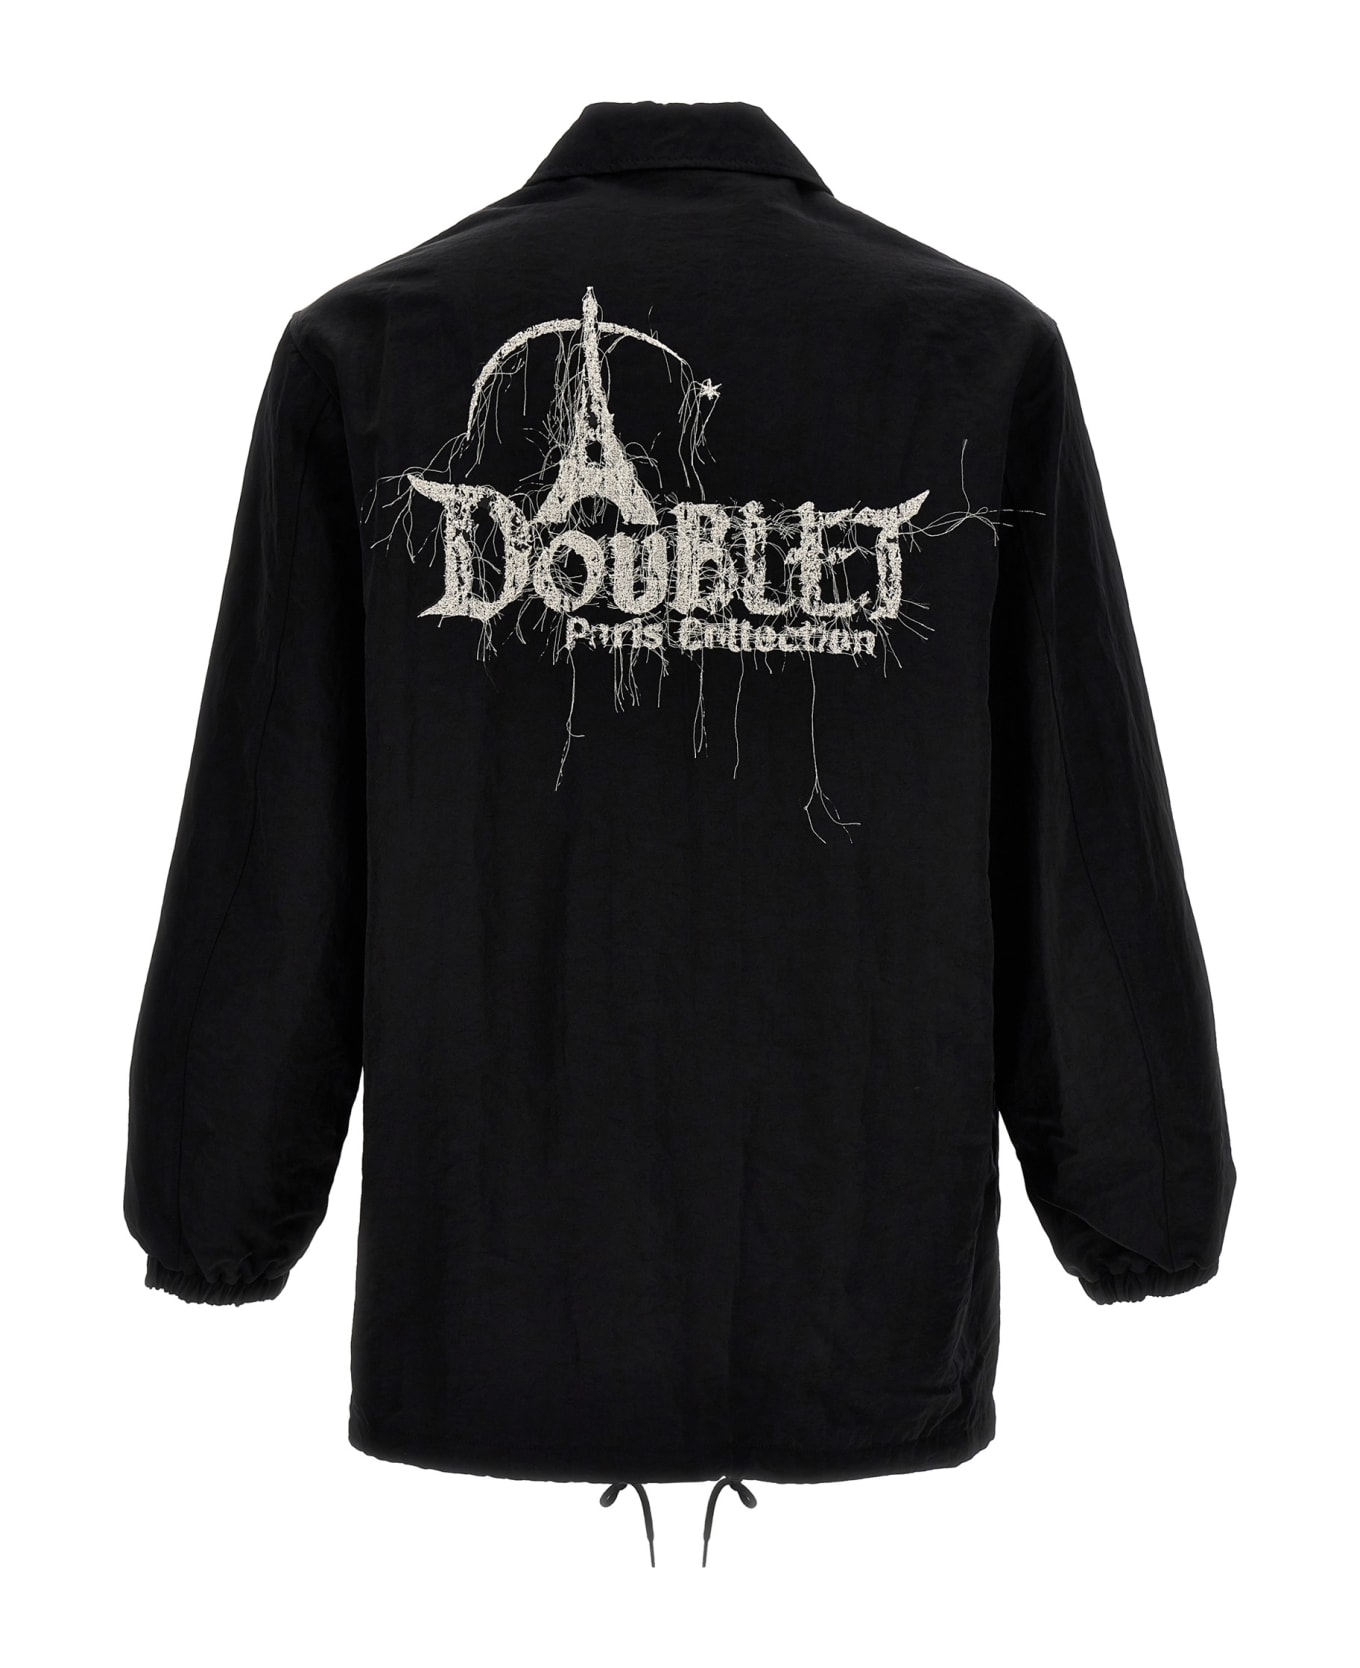 doublet 'doubland' Jacket - Black  